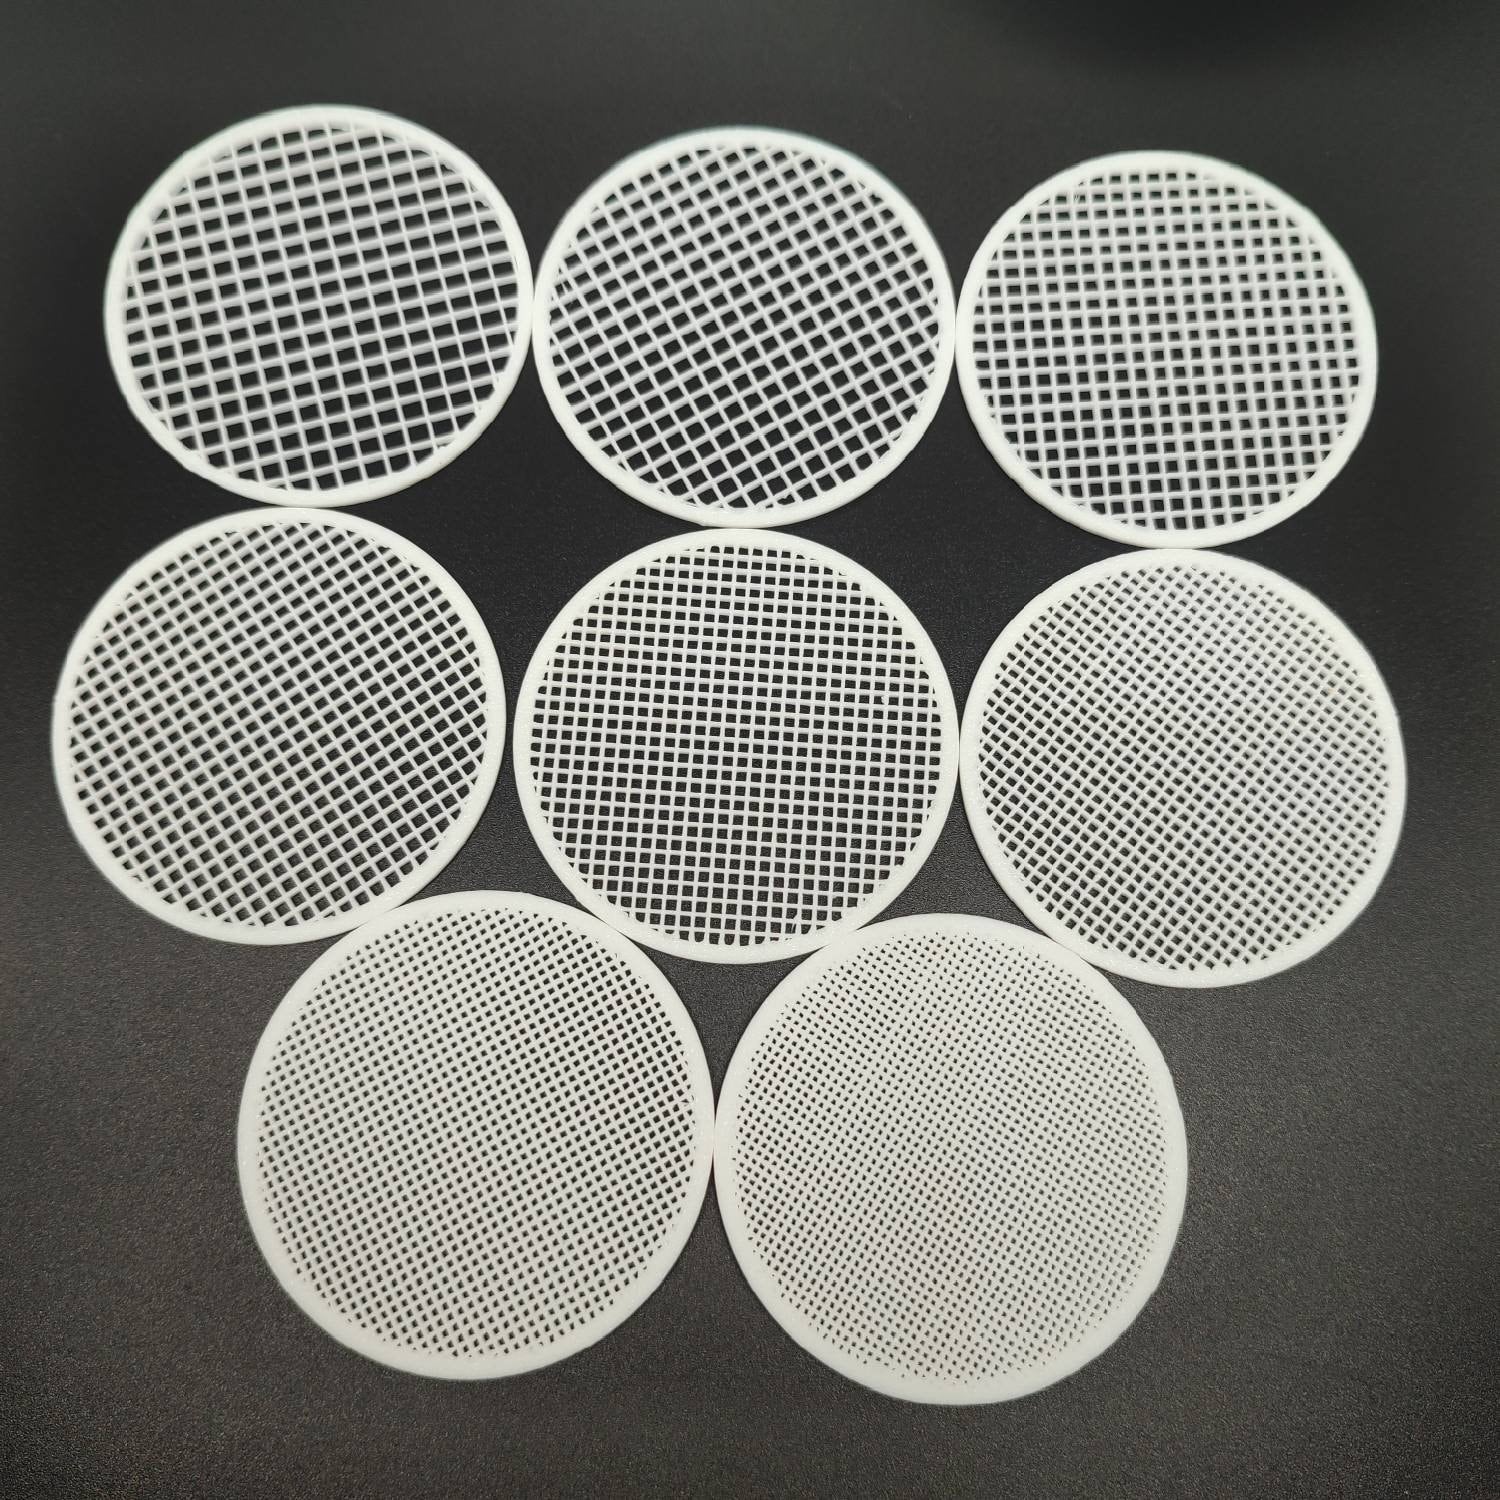 Zona 4x5.5" - 3m WetorDry Micron Graded Polishing Paper - Assortm -  Bentwood Ring Supplies